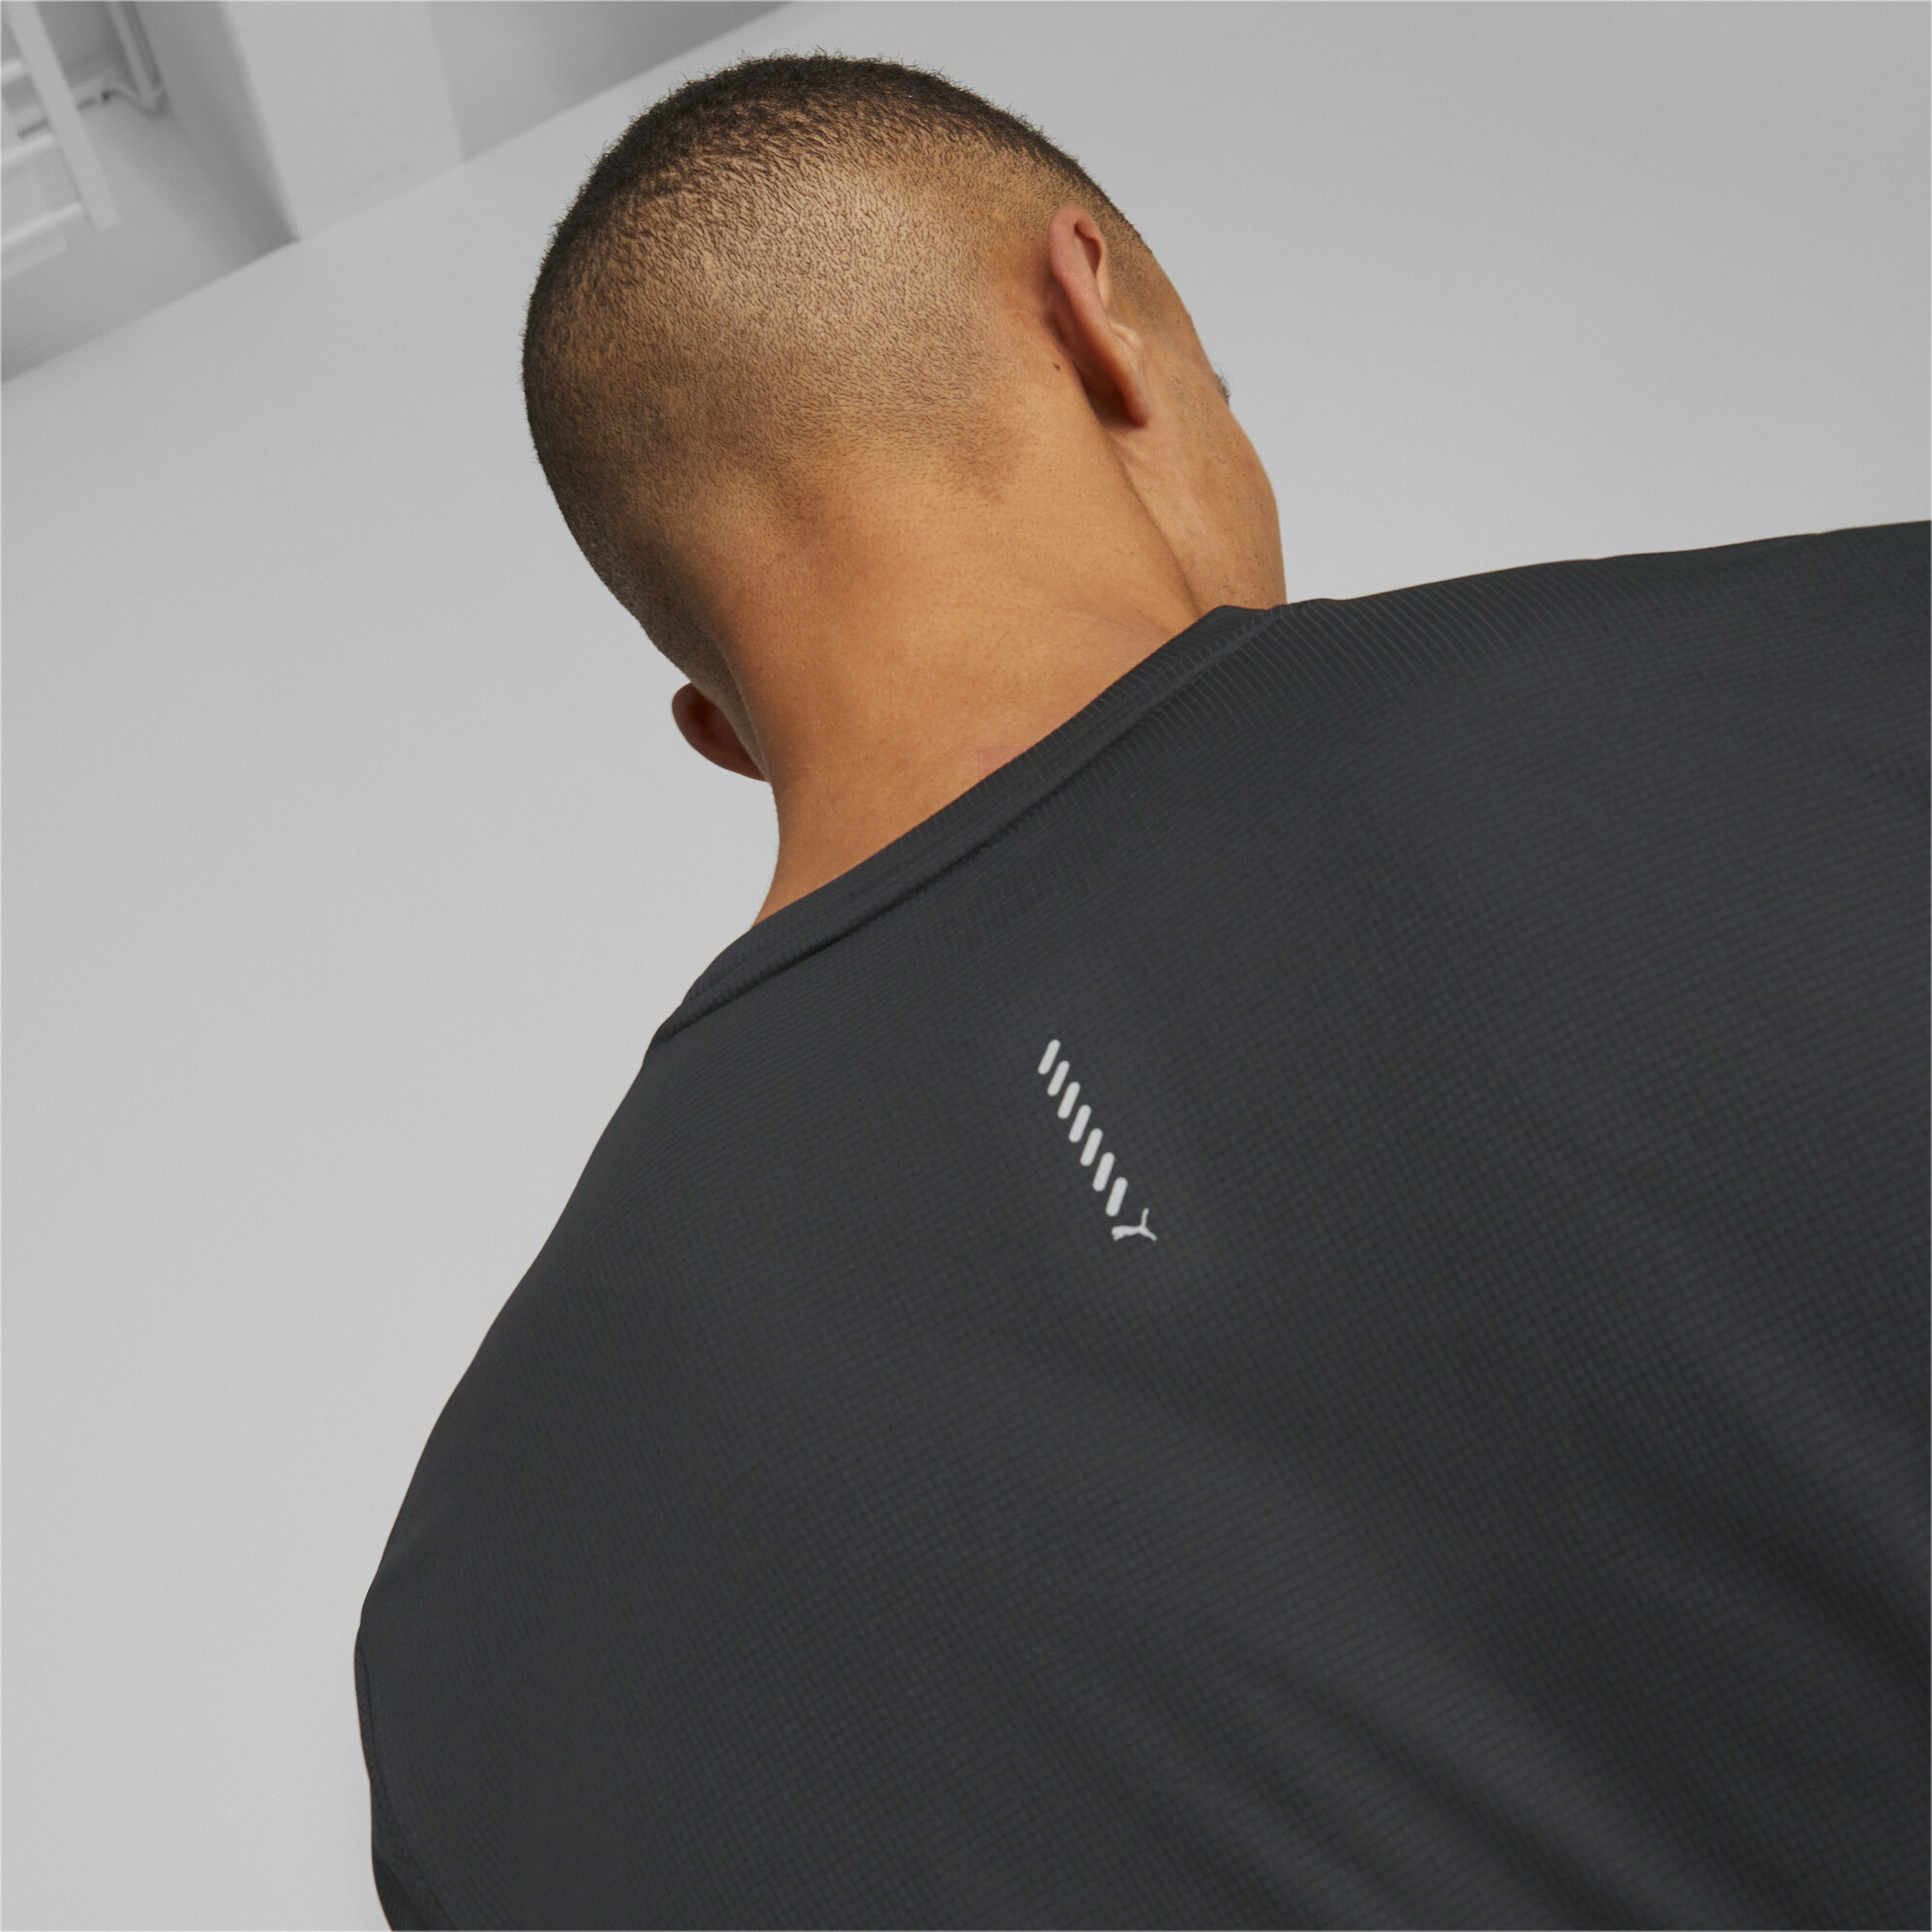 Men's PUMA RUN FAVOURITE Short Sleeve Graphic Running T-Shirt Men In Black, Size XL